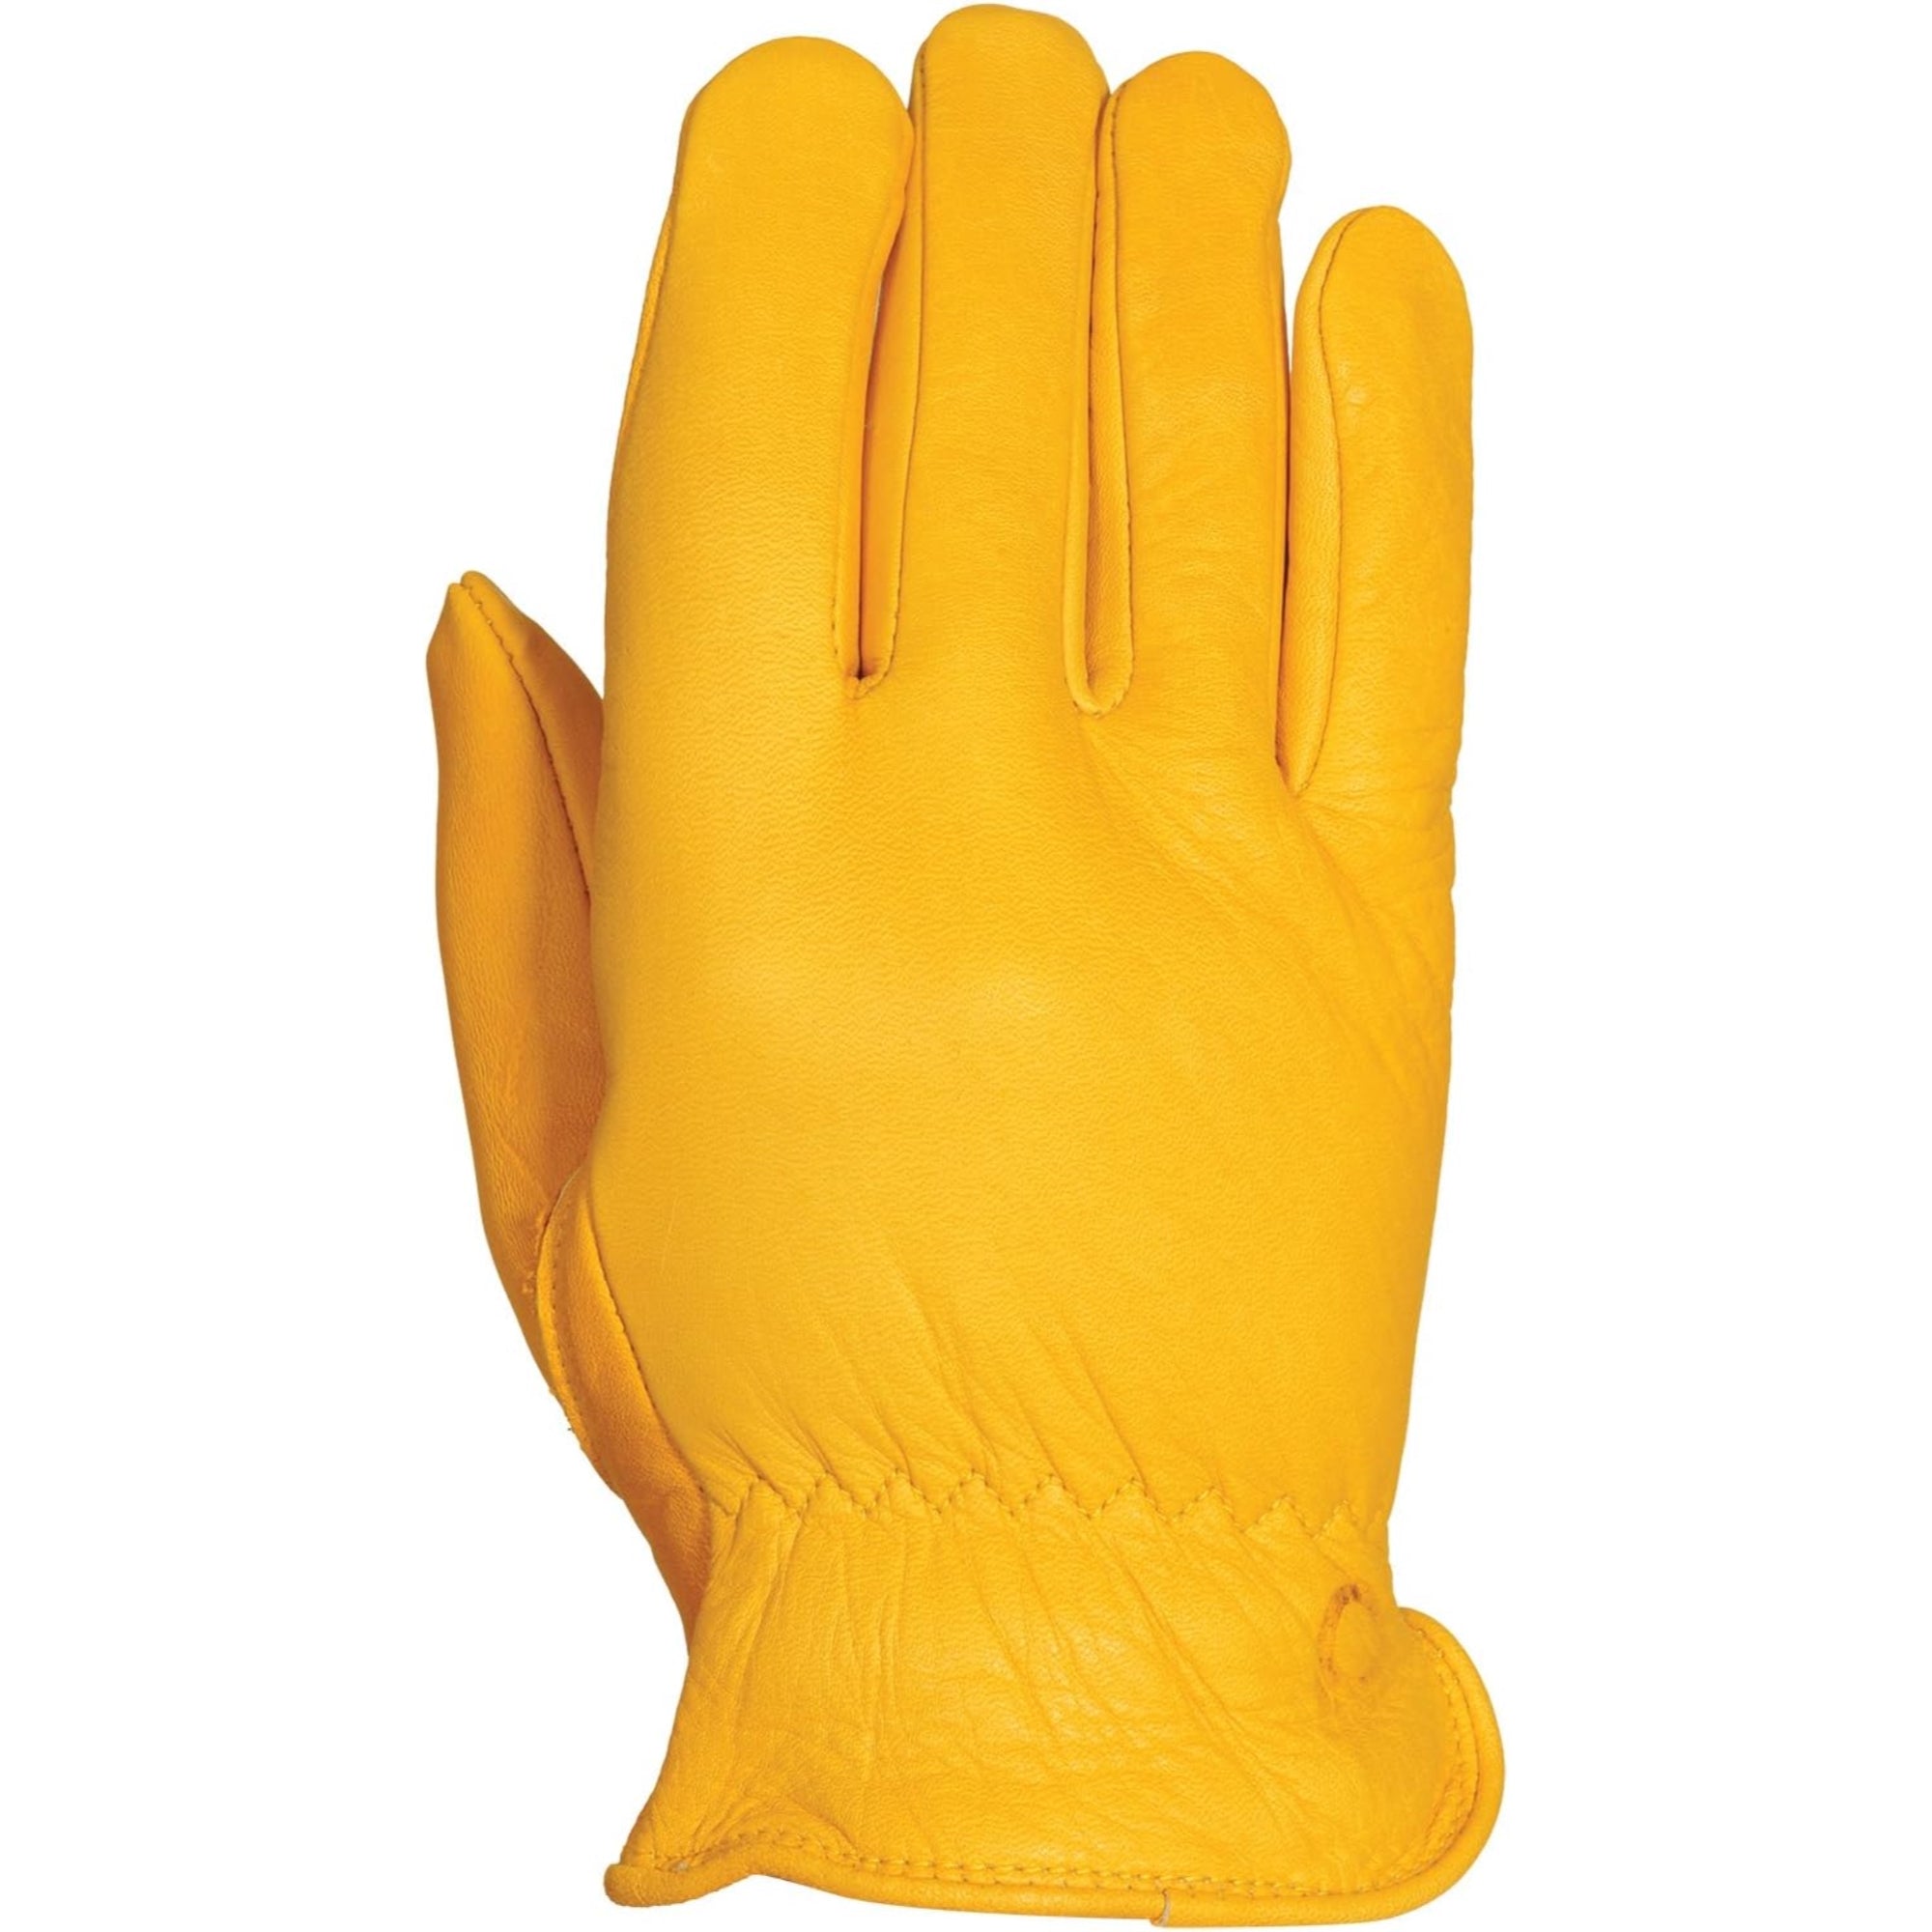 Atlas Gloves Men's Bellingham Premium Leather Driving Gloves, Extra-Large